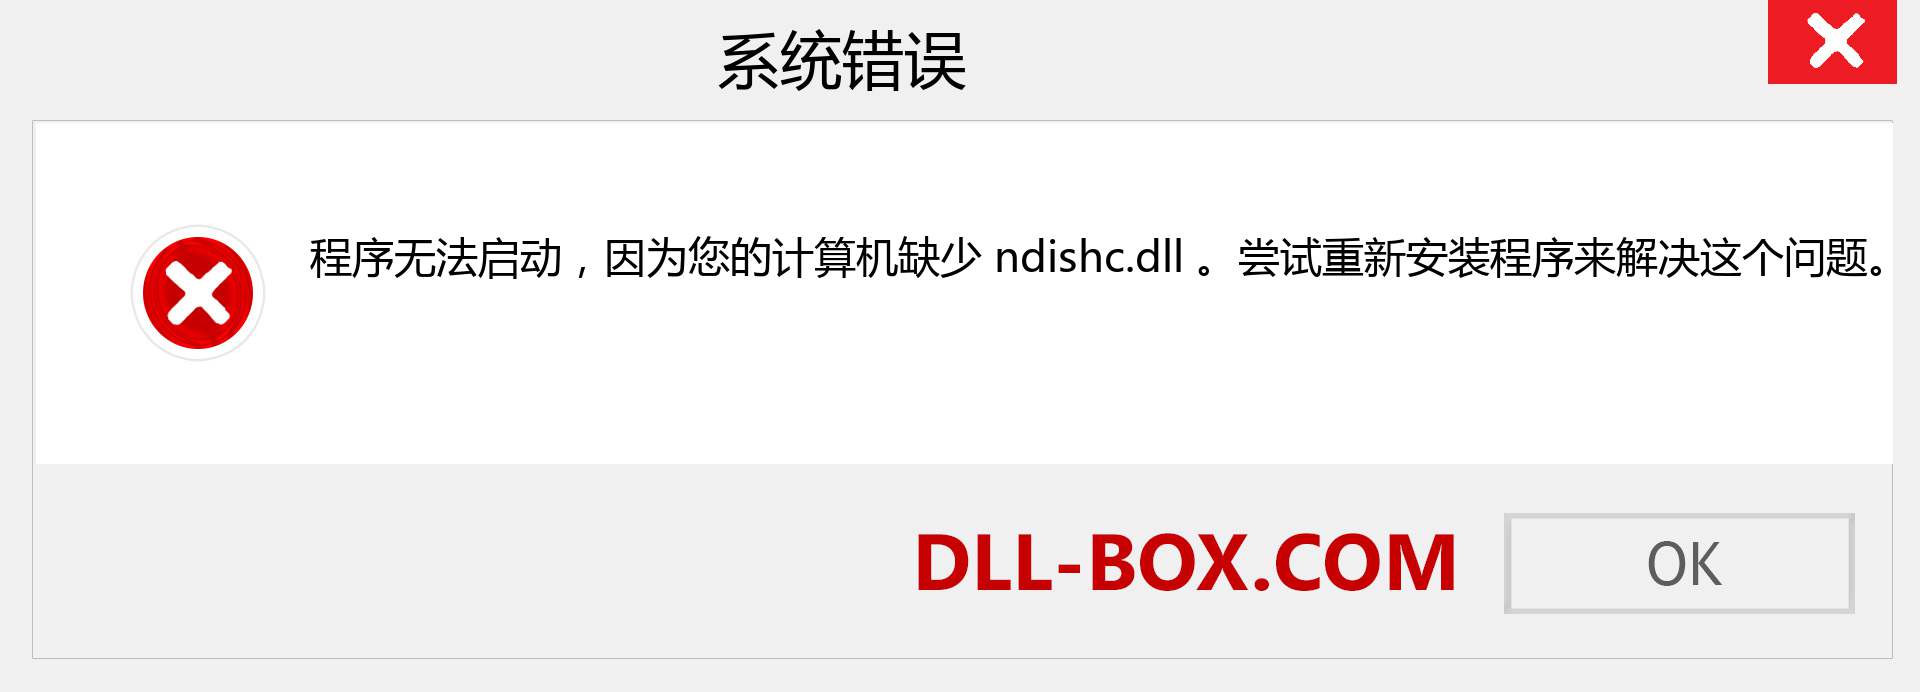 ndishc.dll 文件丢失？。 适用于 Windows 7、8、10 的下载 - 修复 Windows、照片、图像上的 ndishc dll 丢失错误